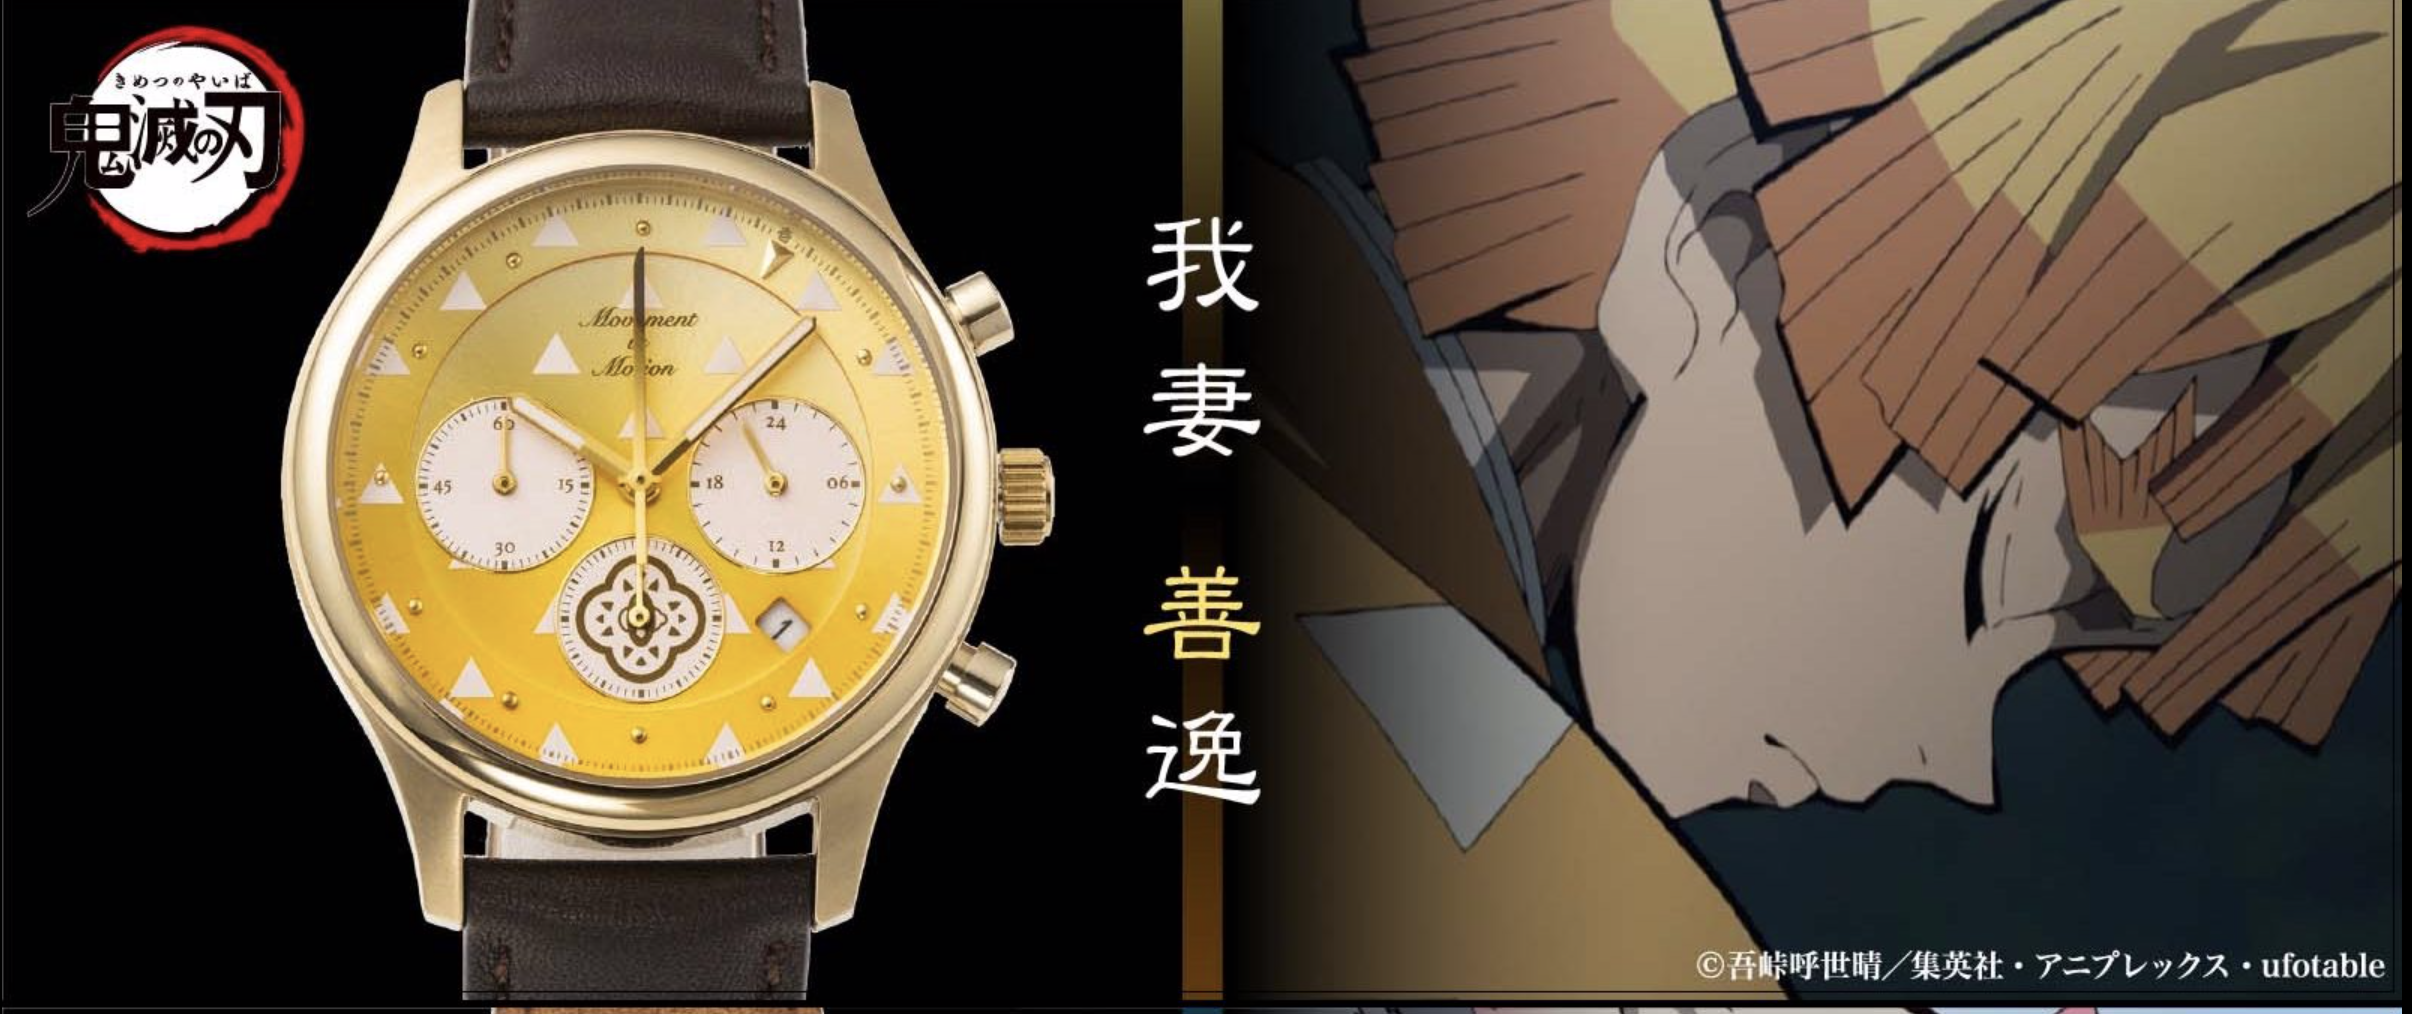 Zenitsu watch